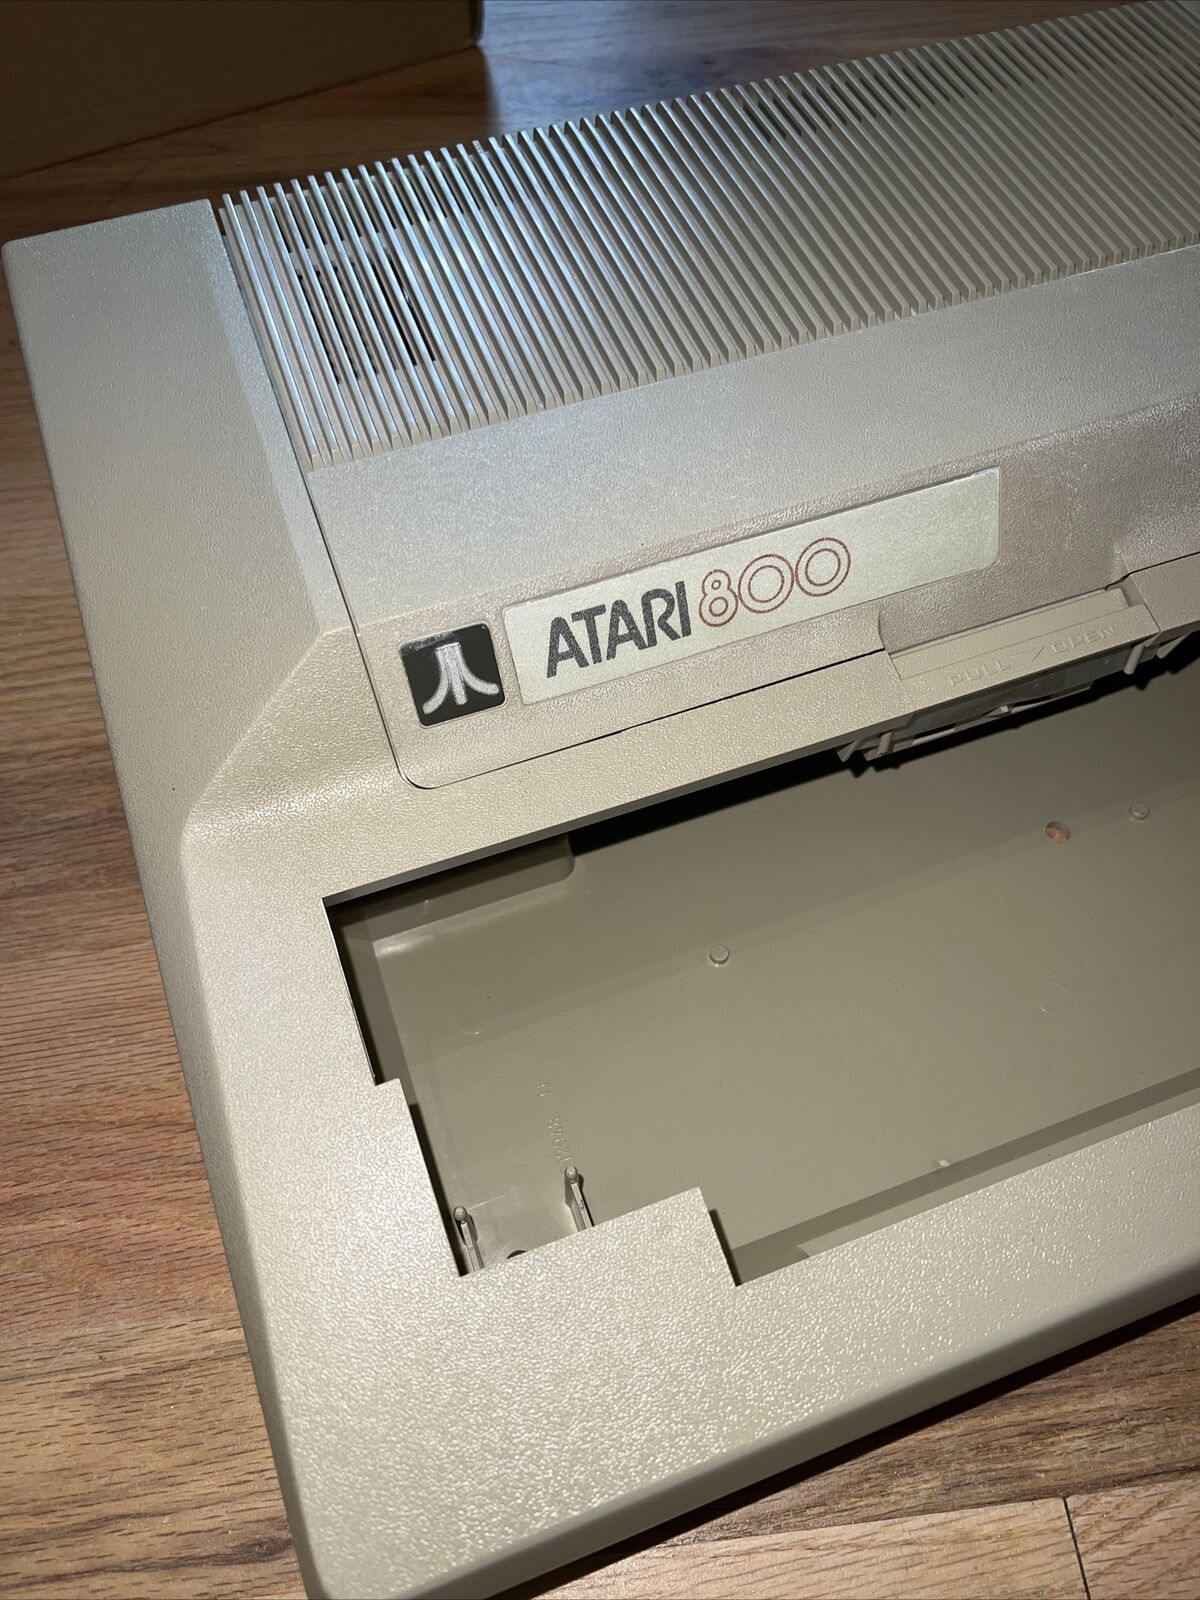 Atari 800 case in very good condition